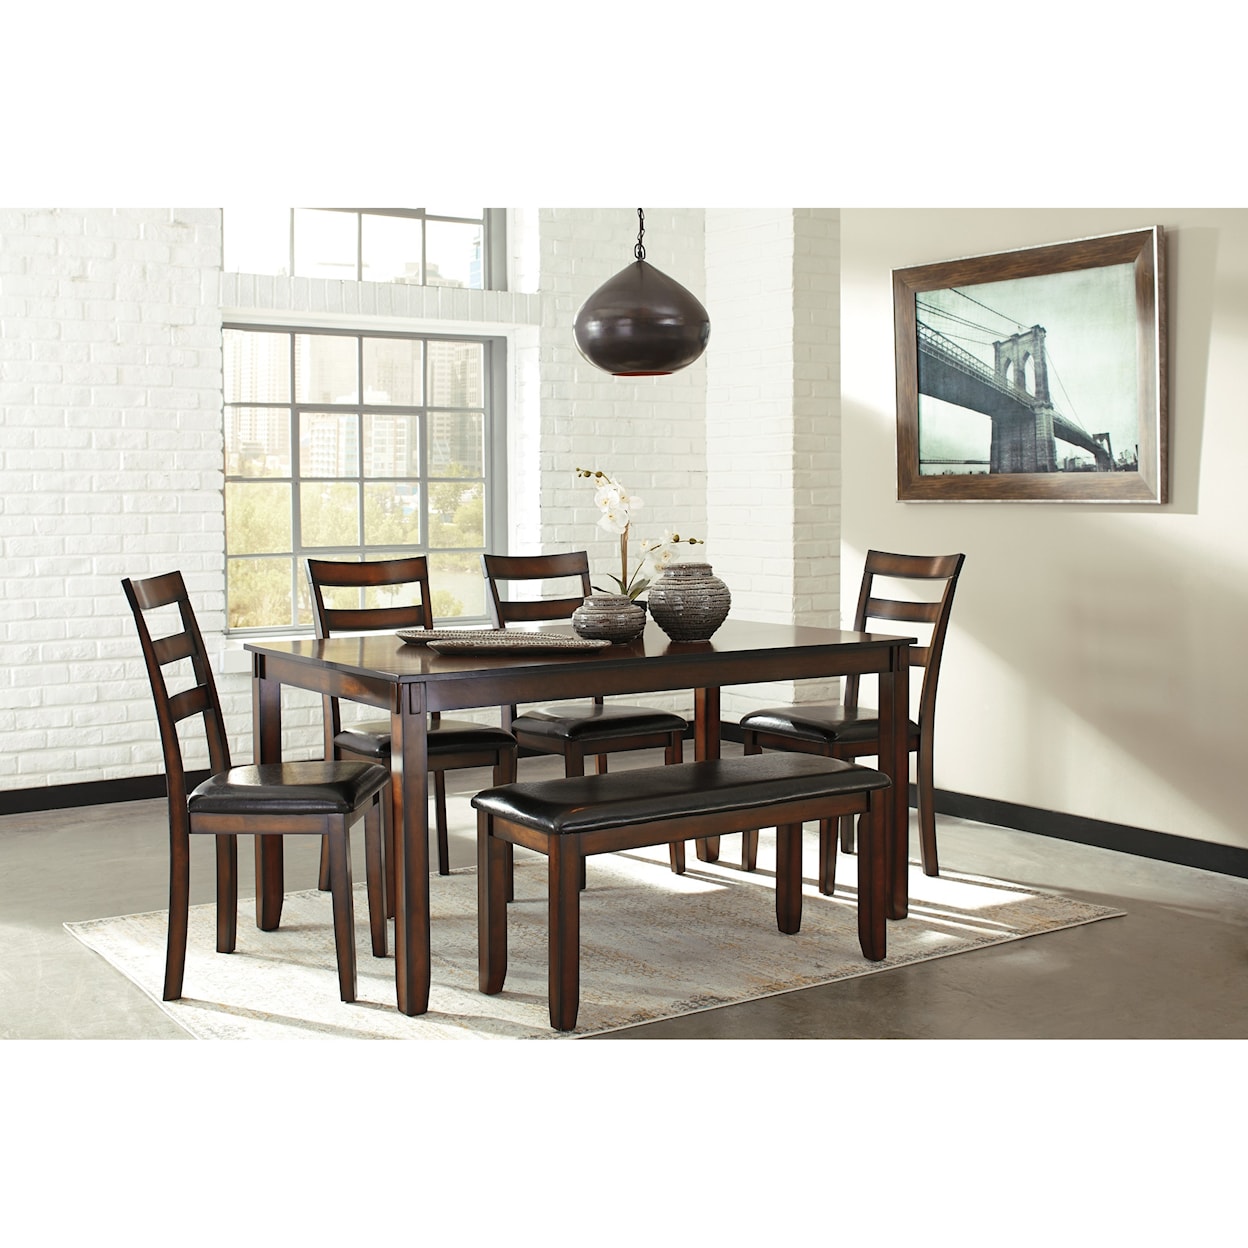 Ashley Furniture Signature Design Coviar 6-Piece Dining Room Table Set